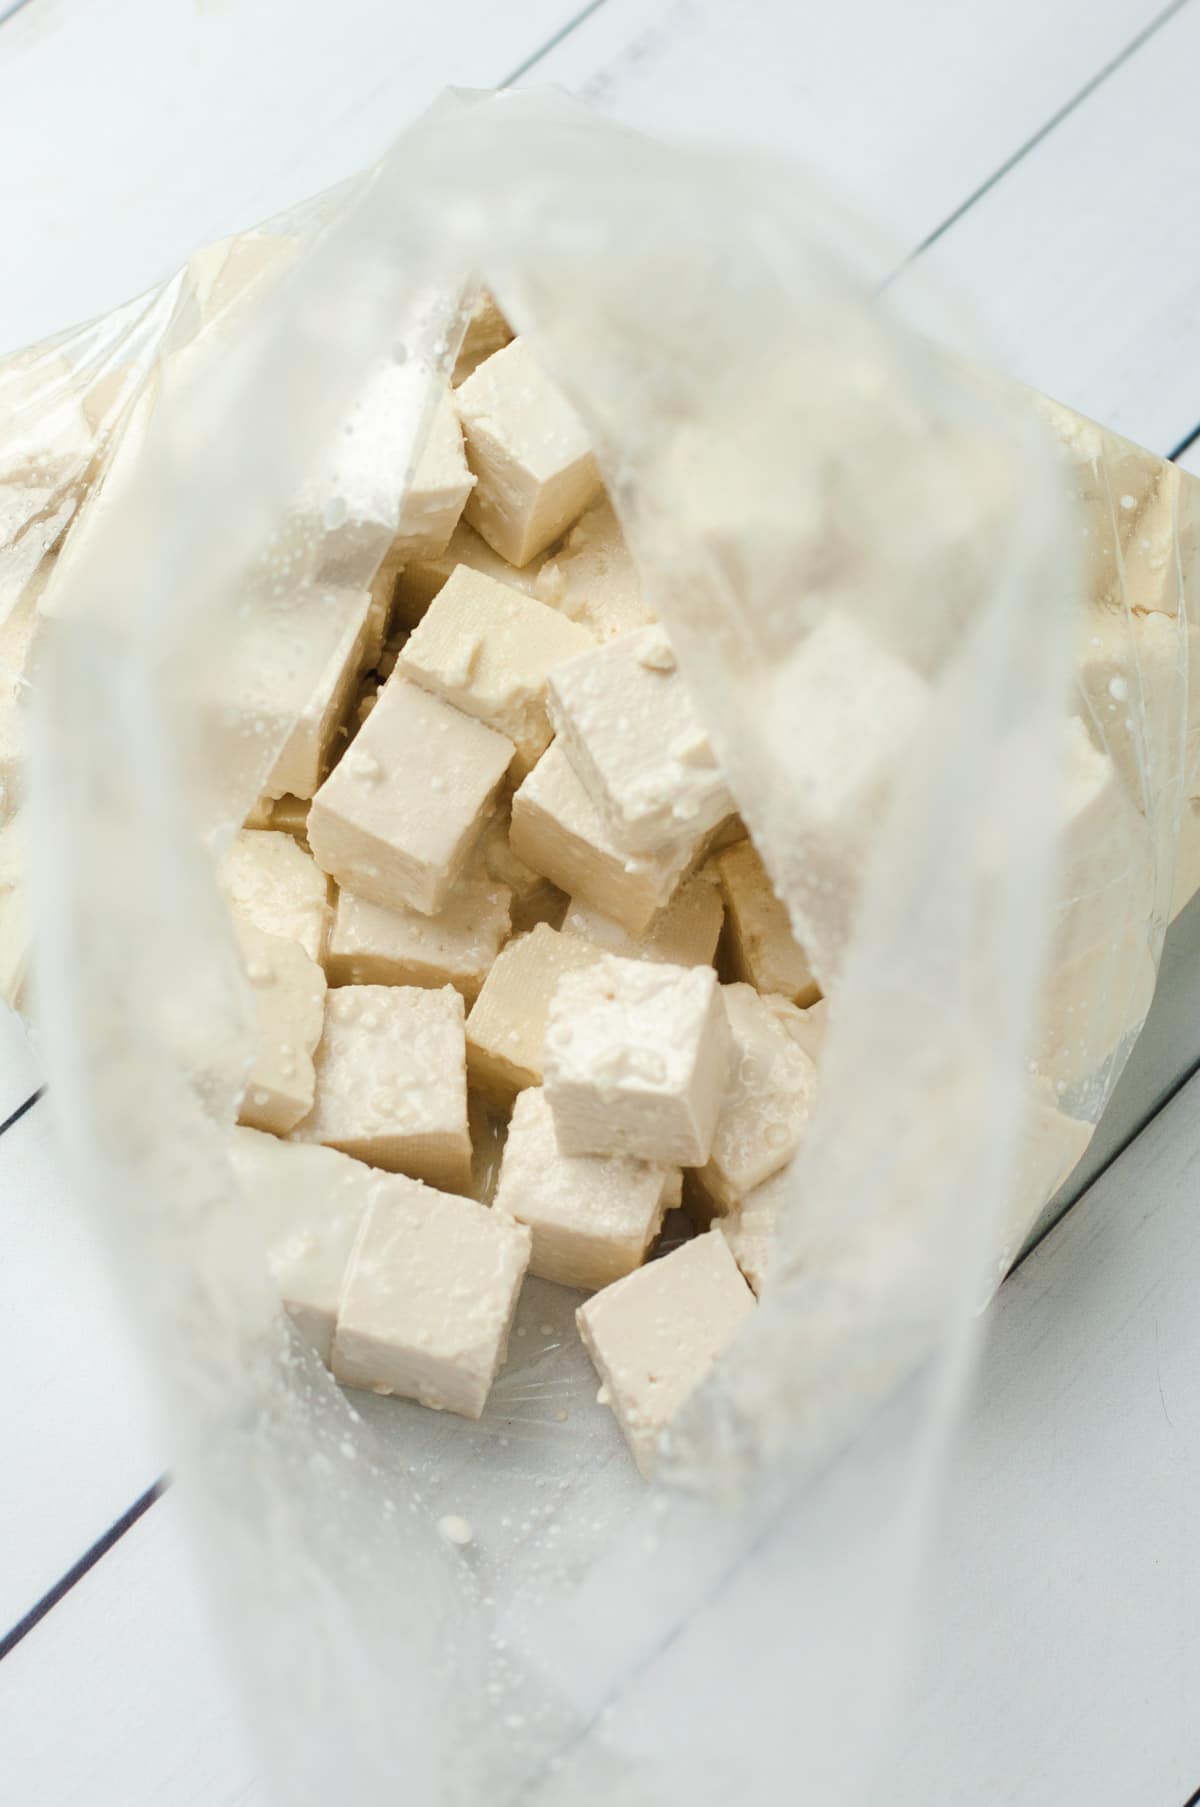 Tofu cubes in a plastic bag.